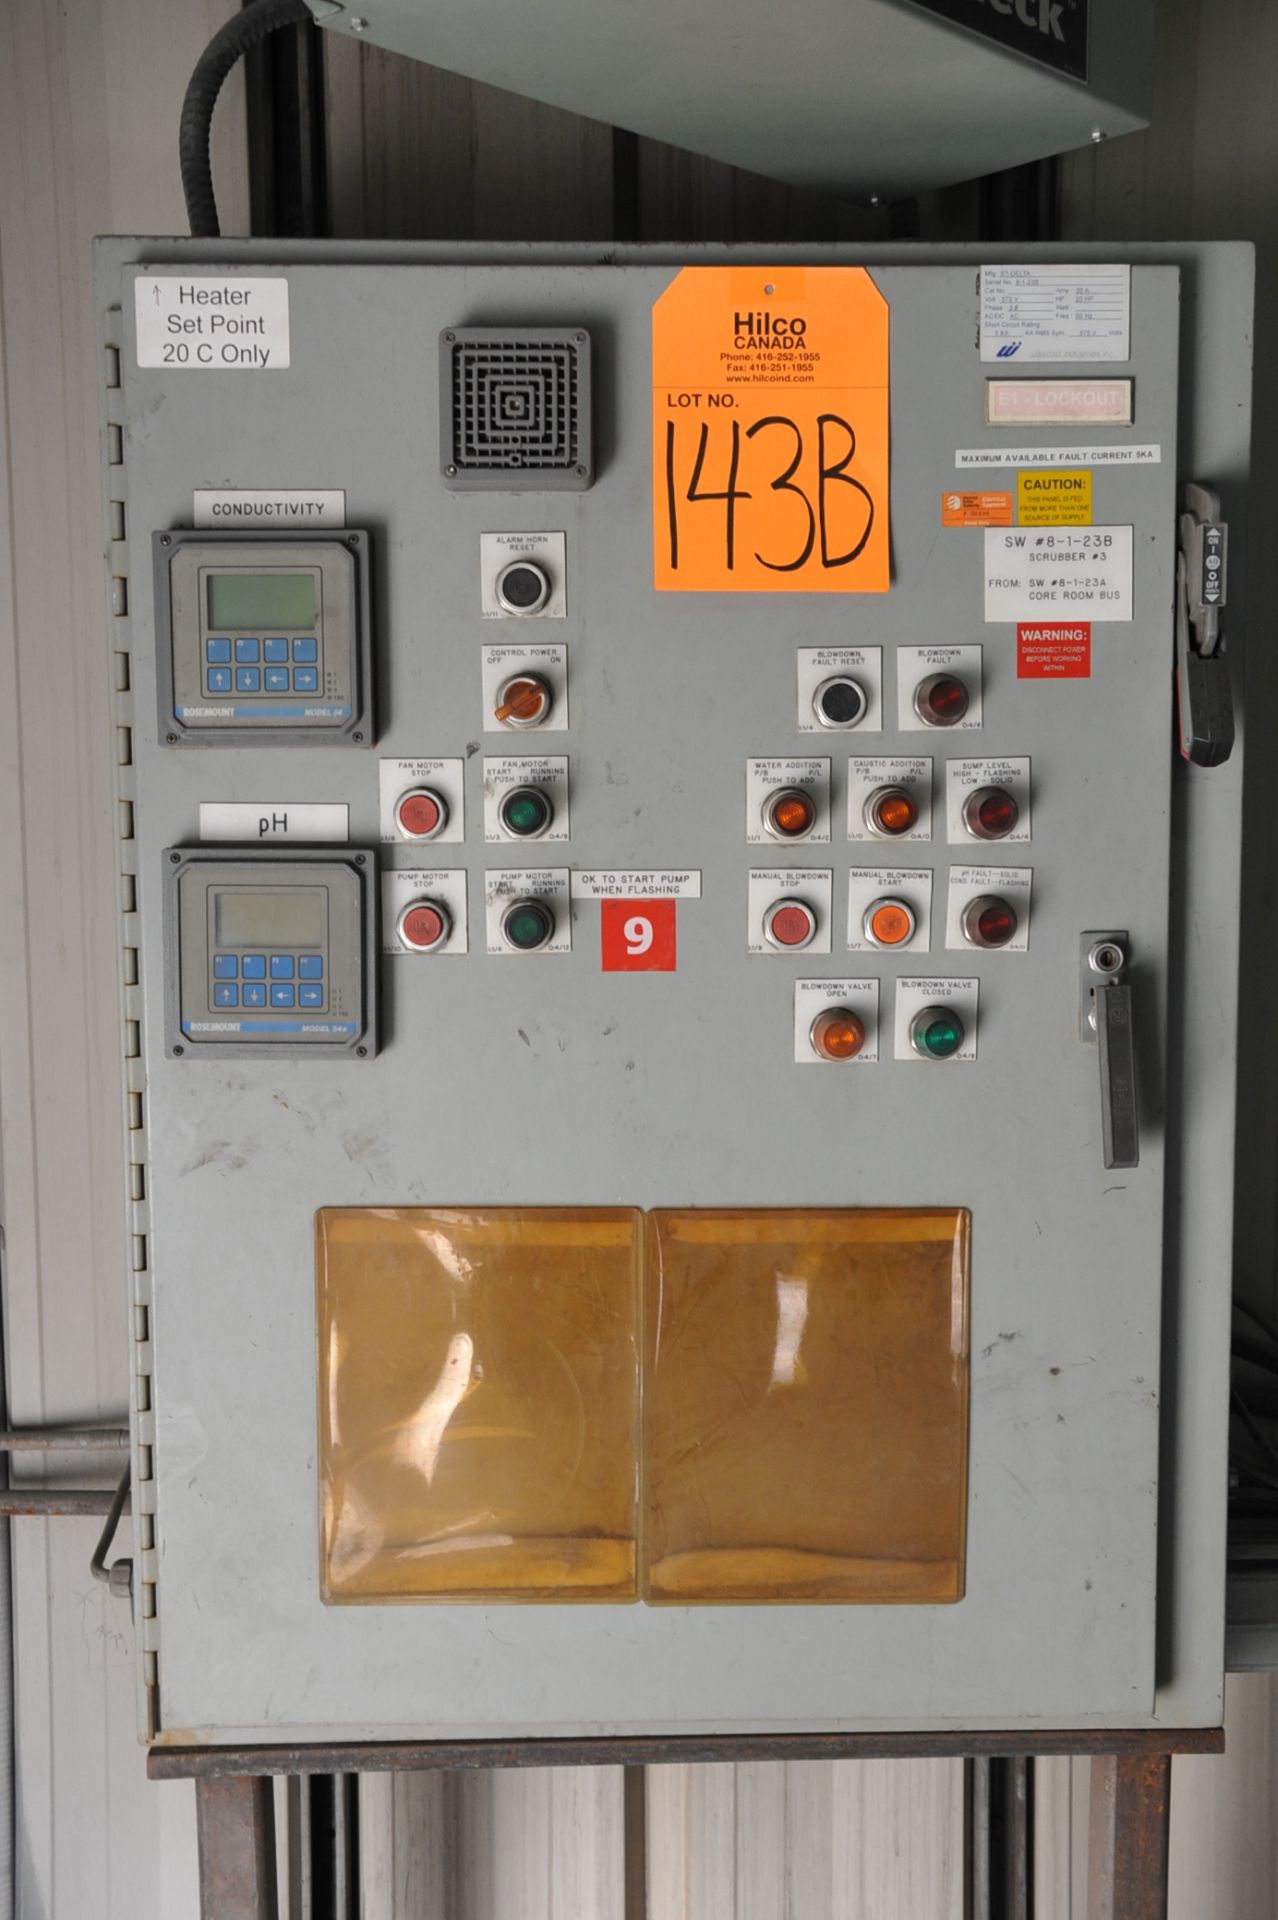 Scrubber c/w Control Panel, Cincinnati HDBI 160 Blower, Storage Tank - Image 3 of 4